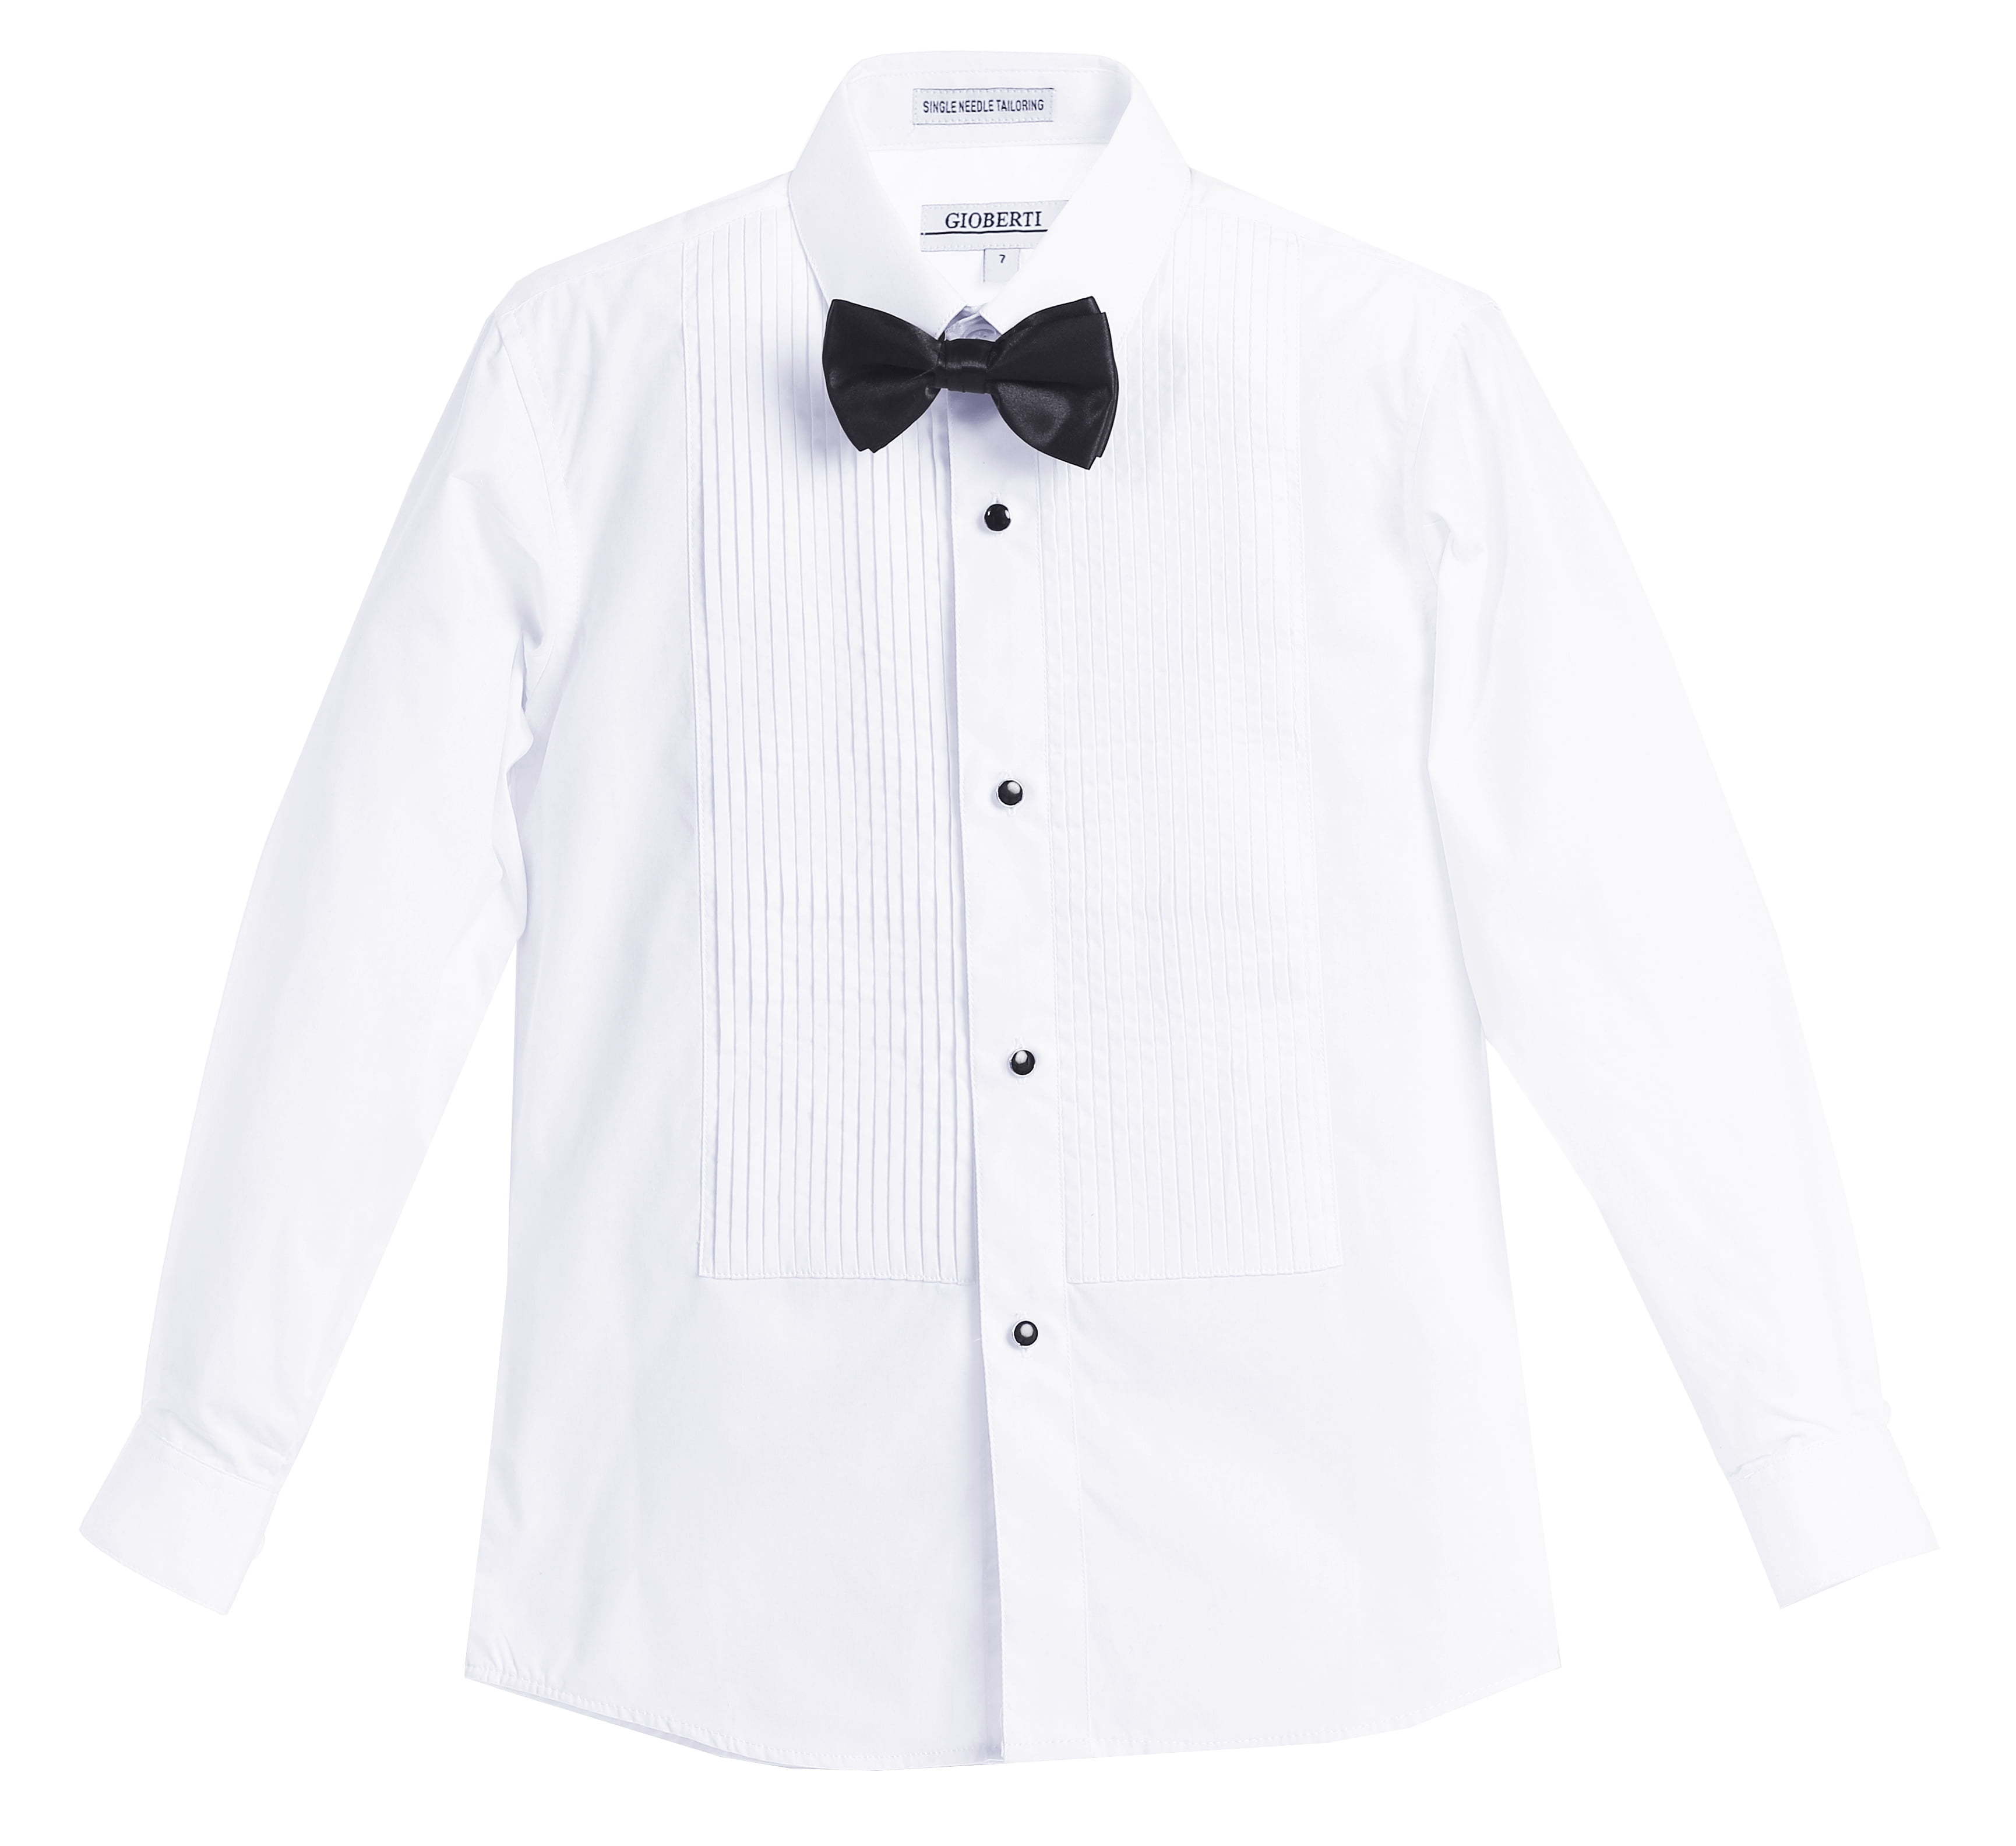 white dress shirt and tie